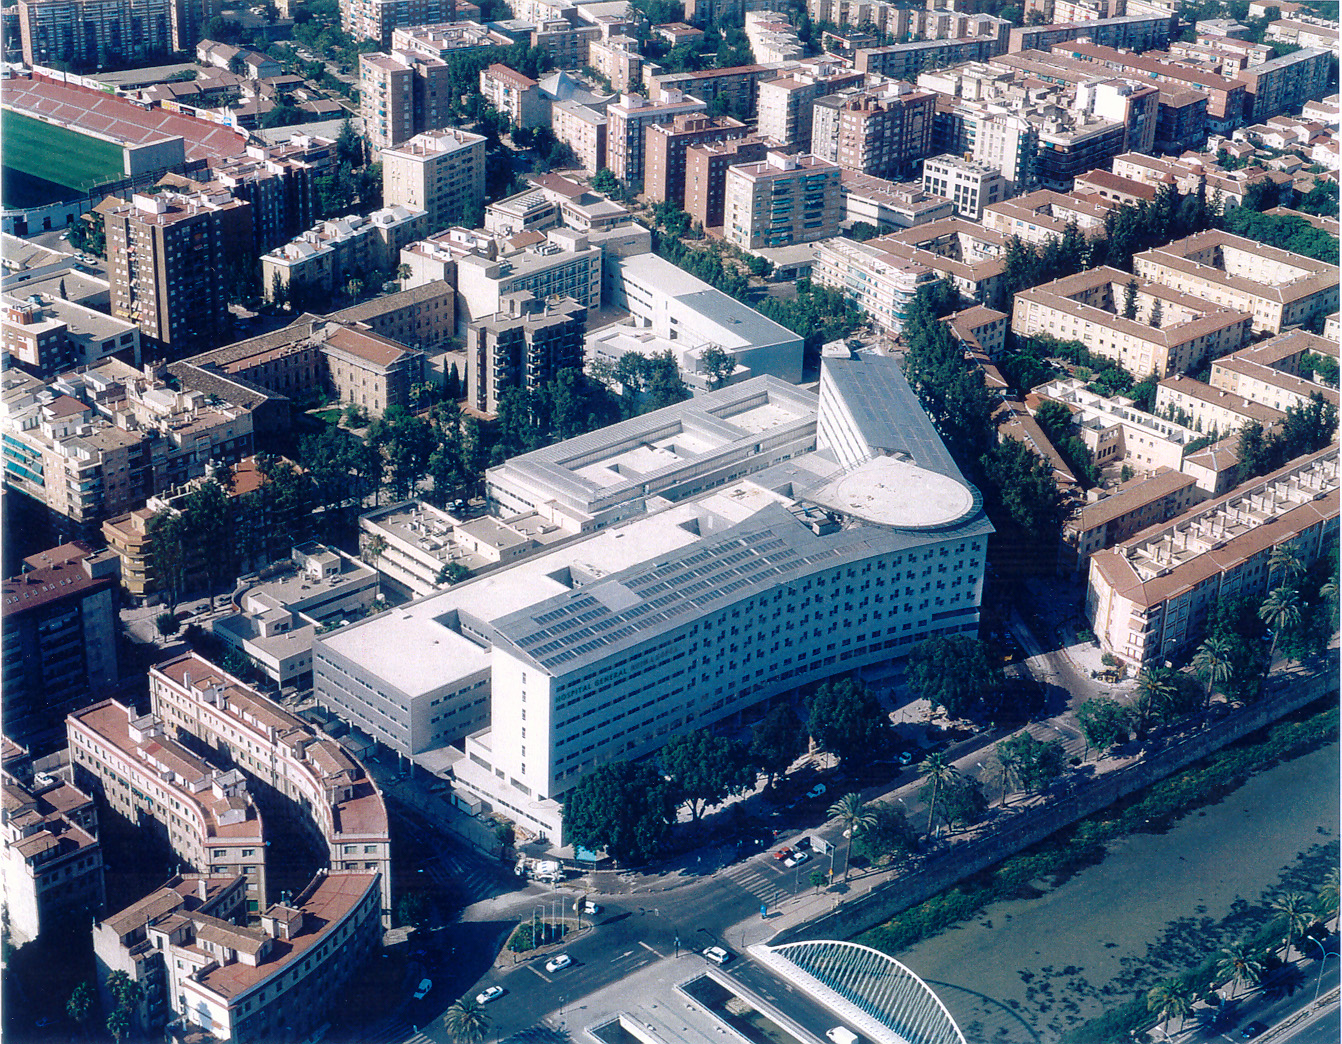 Reina Sofia University Hospital of Murcia